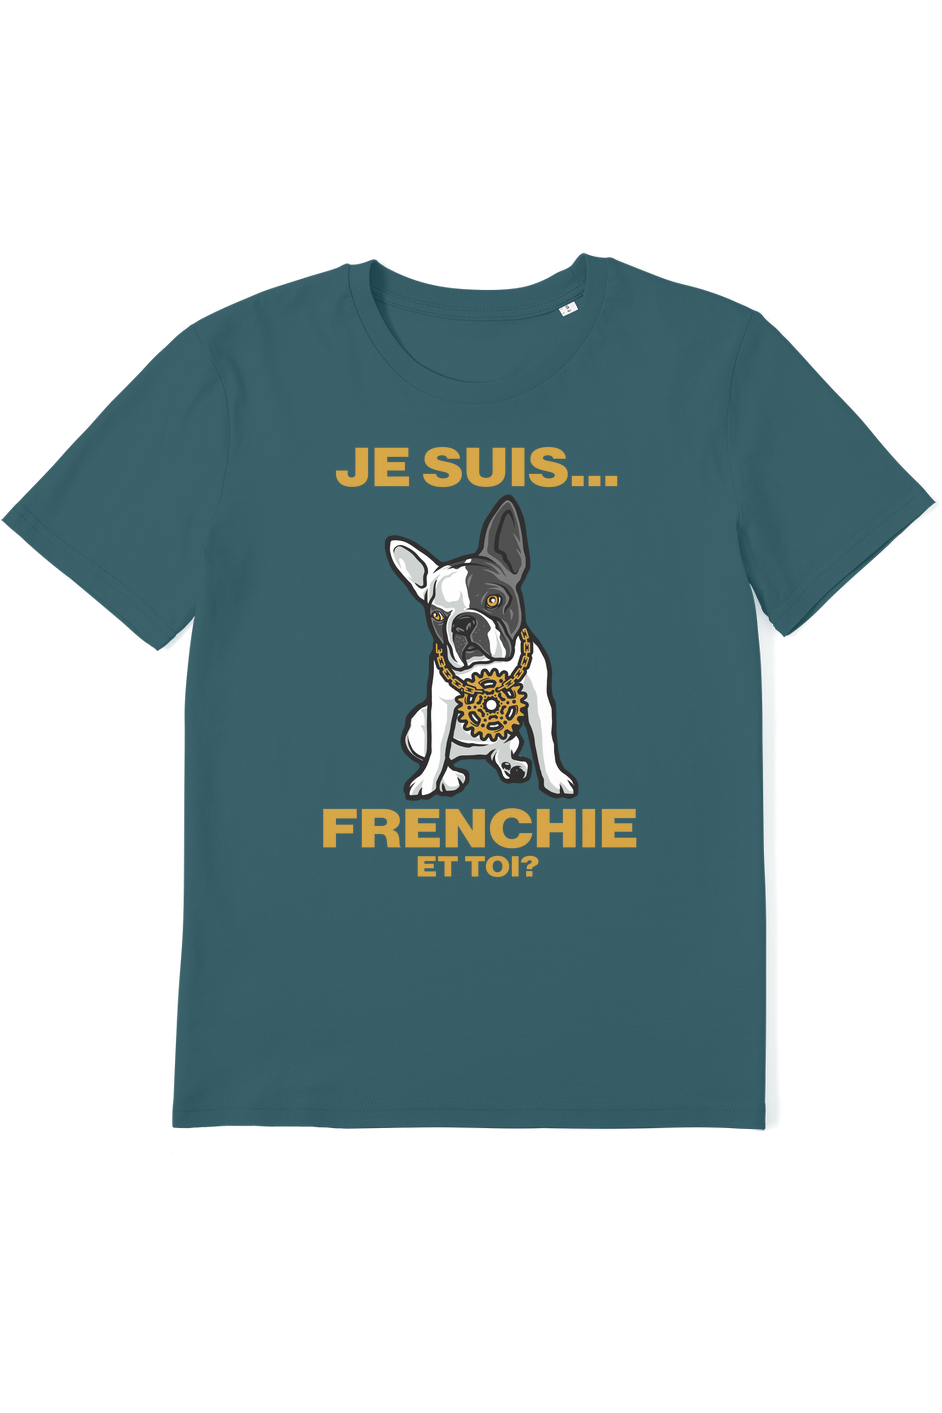 Je Suis Frenchie Organic T-Shirt vegan, sustainable, organic streetwear, - TRVTH ORGANIC CLOTHING